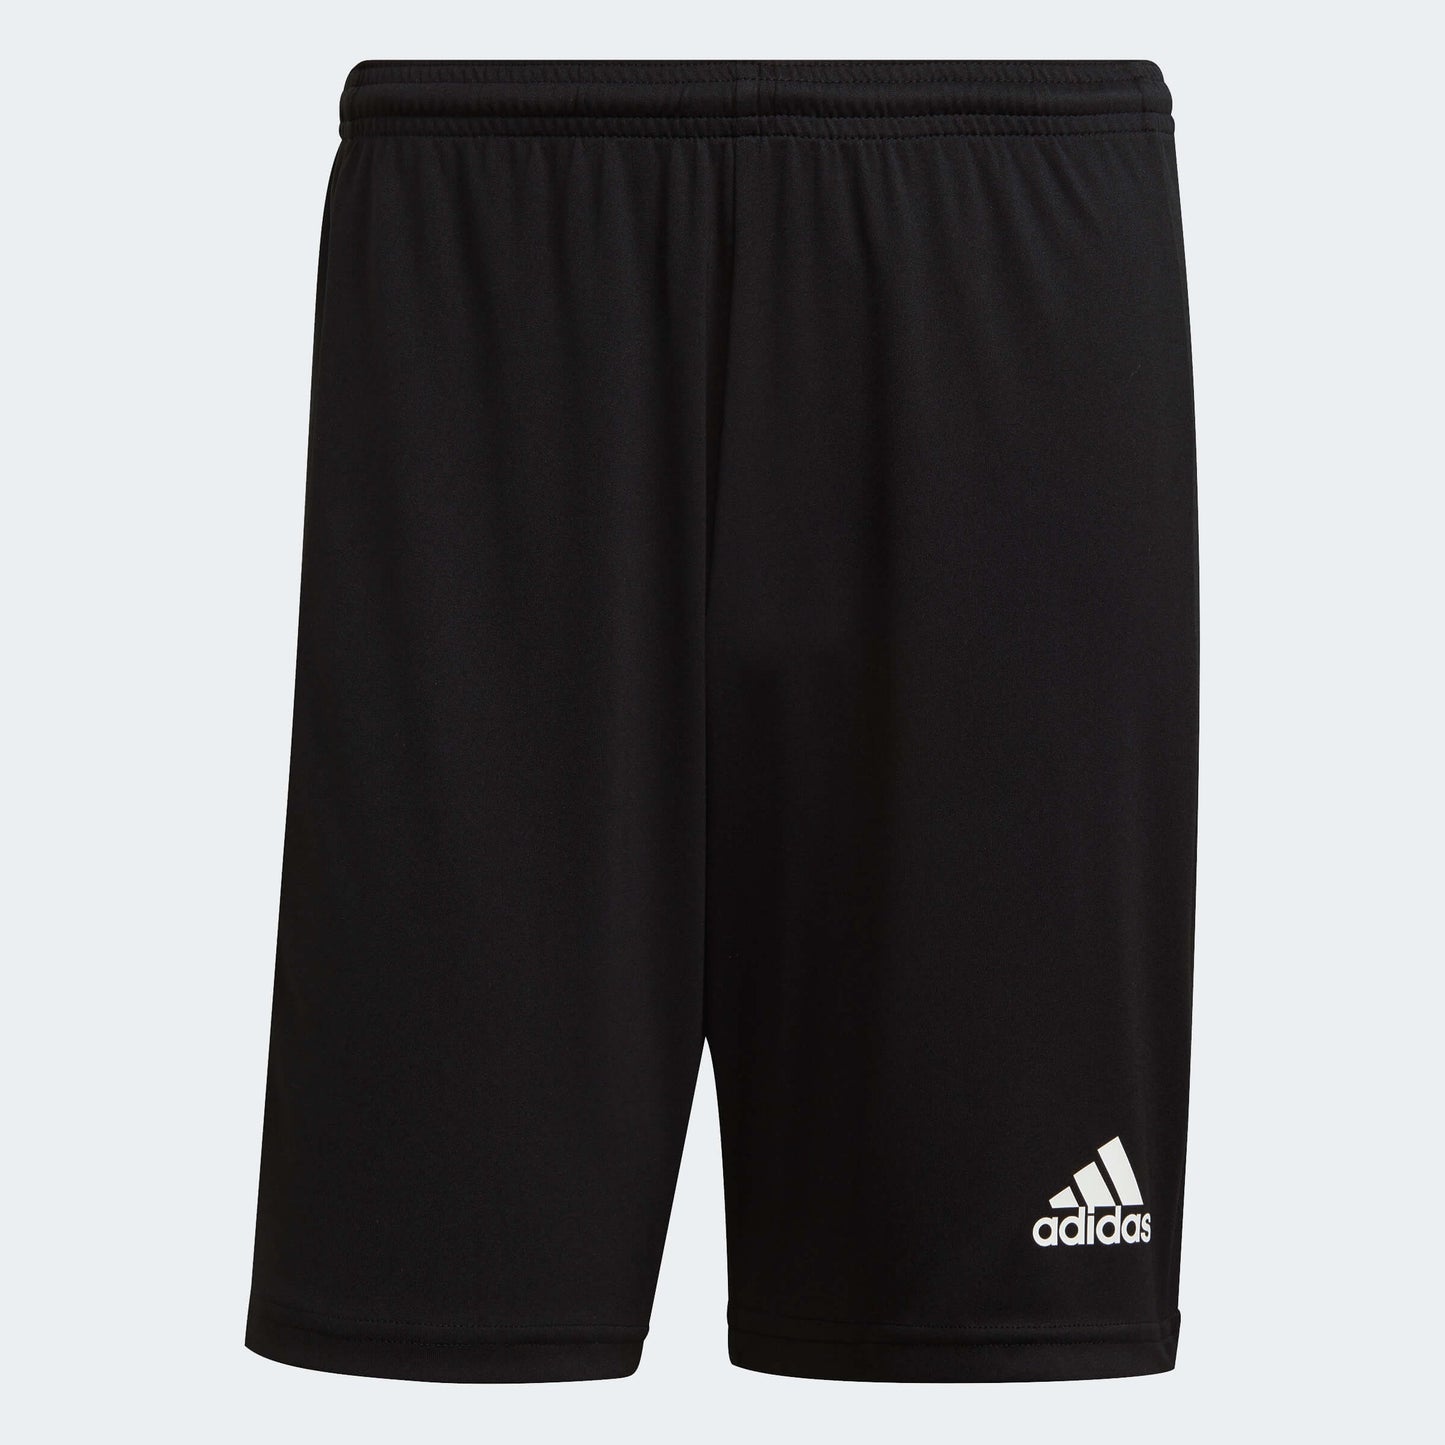  adidas Squadra 21 Shorts Black-White (Front)